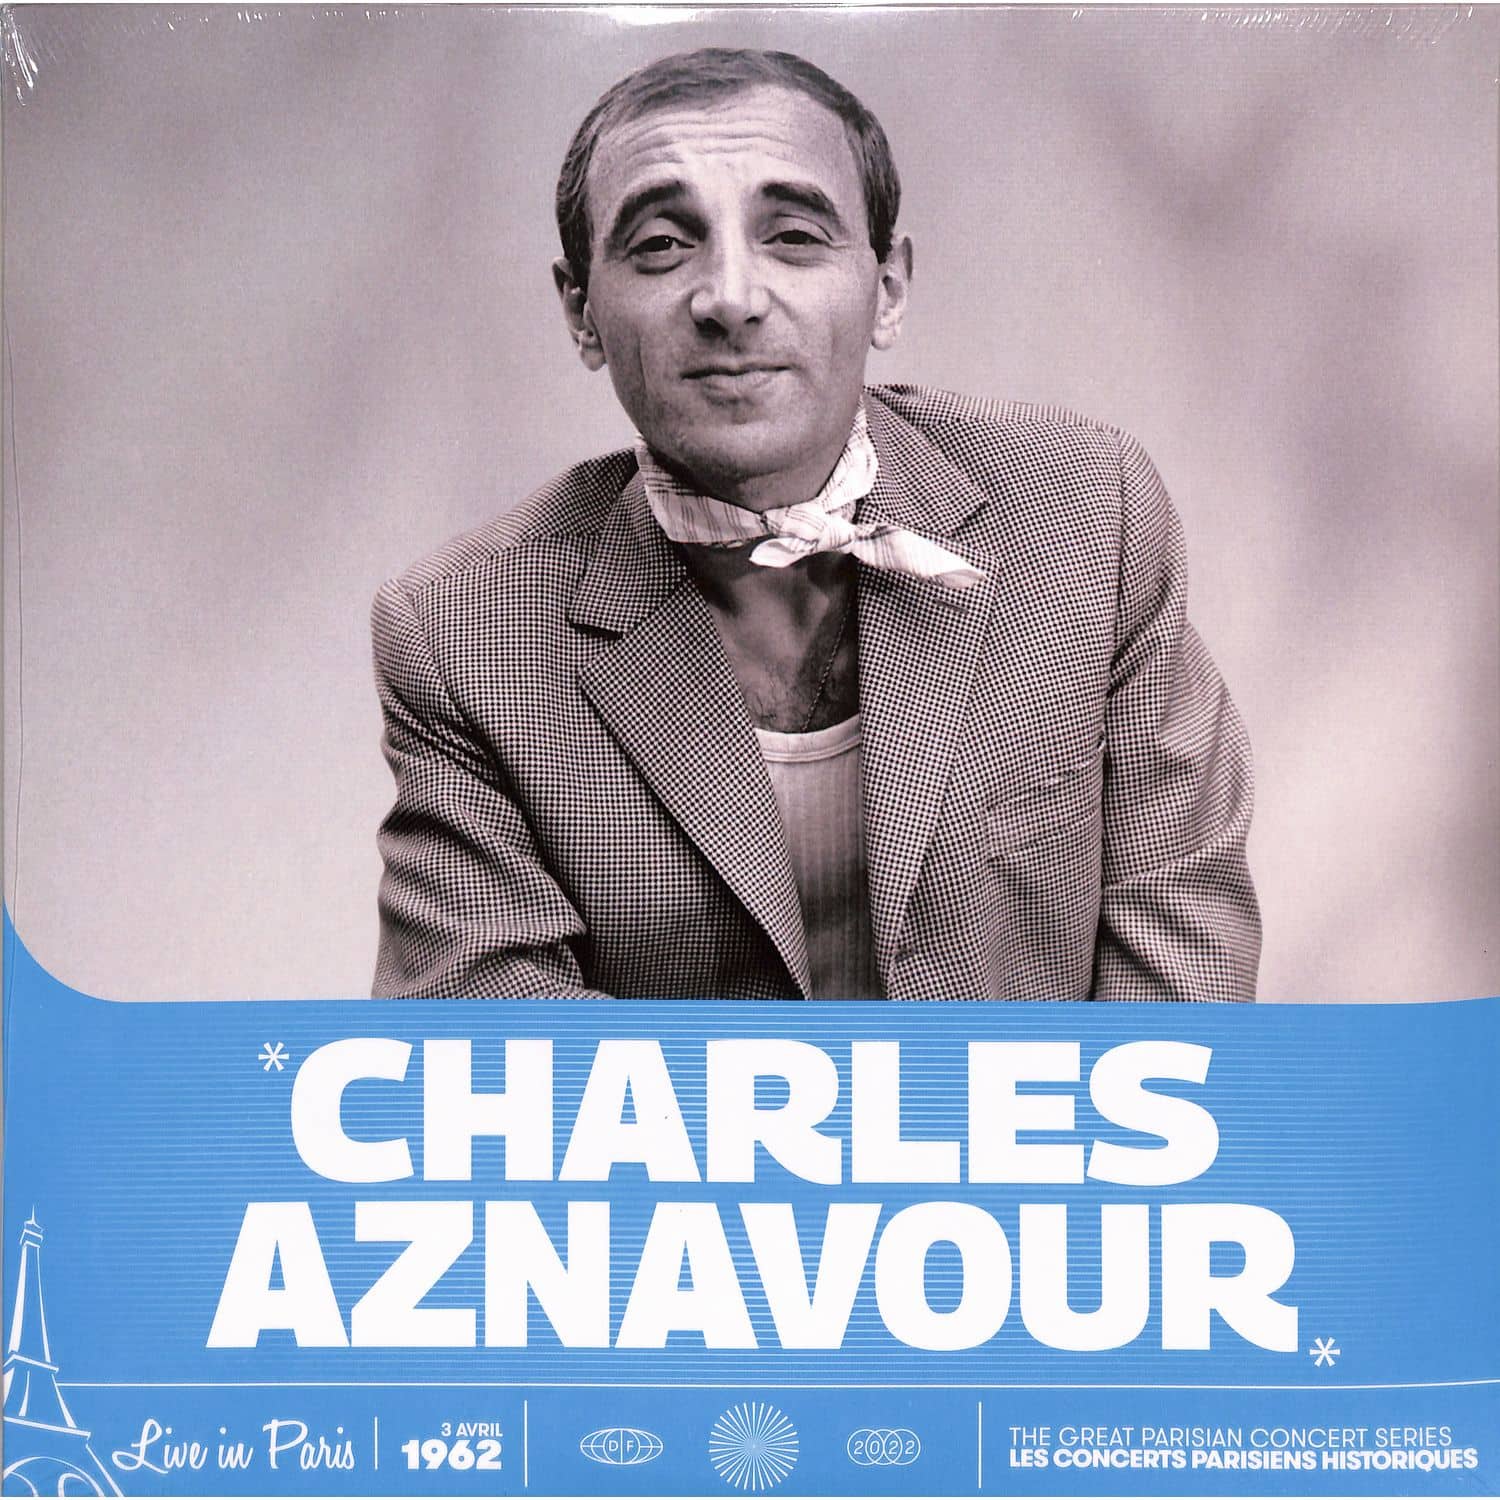  Charles Aznavour - LIVE IN PARIS 